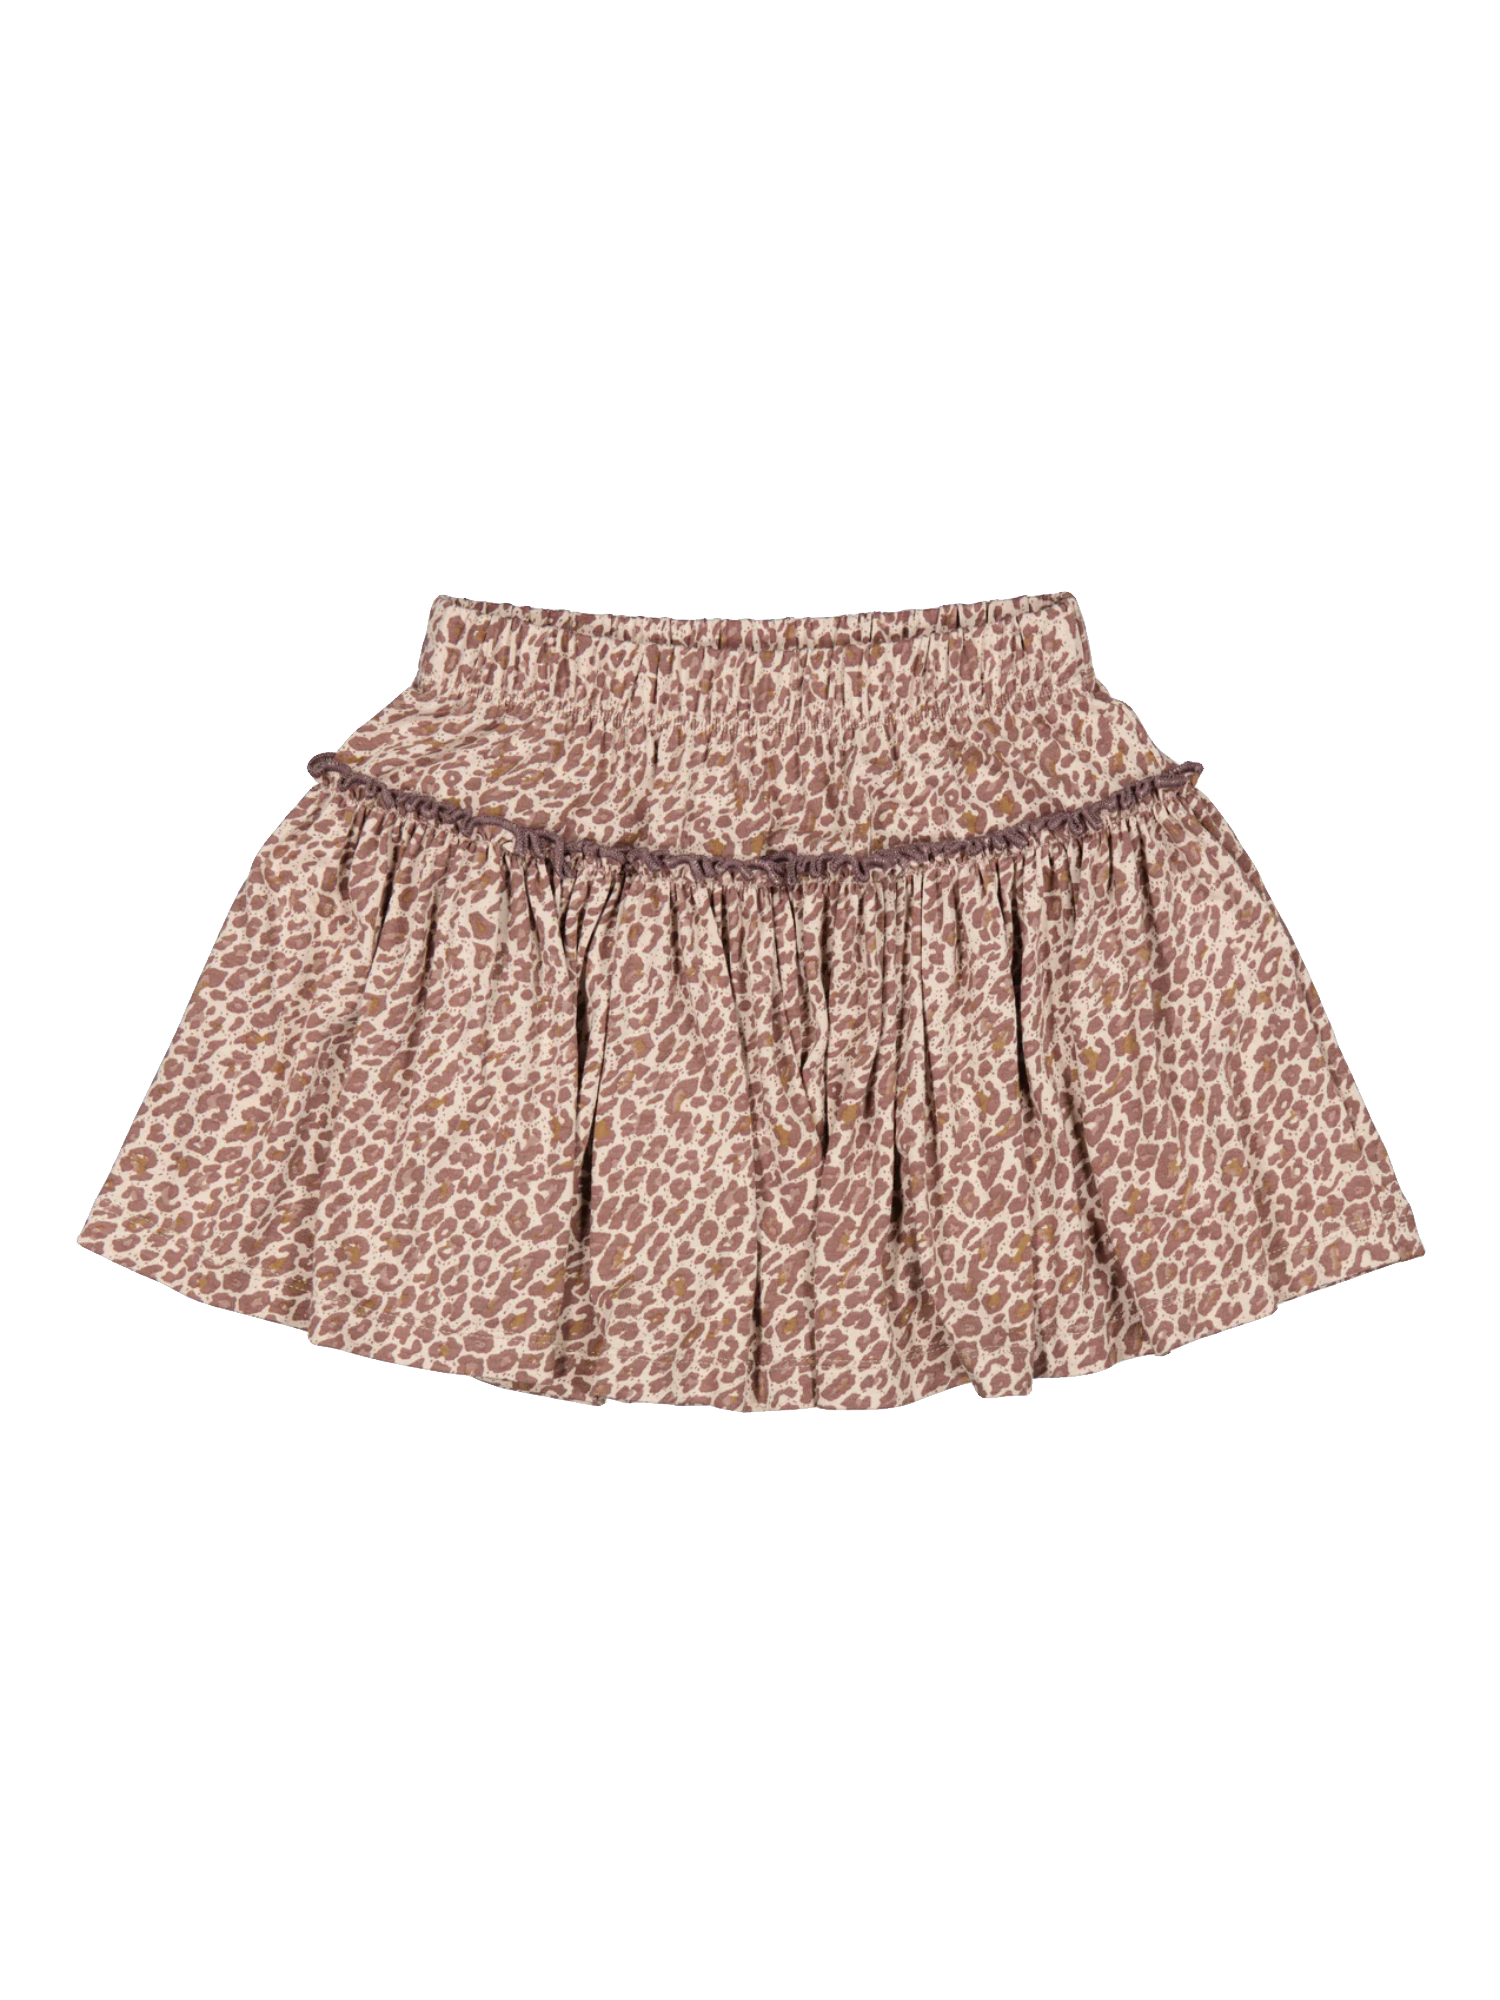 MarMar Copenhagen Sana Skirt in Plum or Cinnamon - PinkOrchidFashion